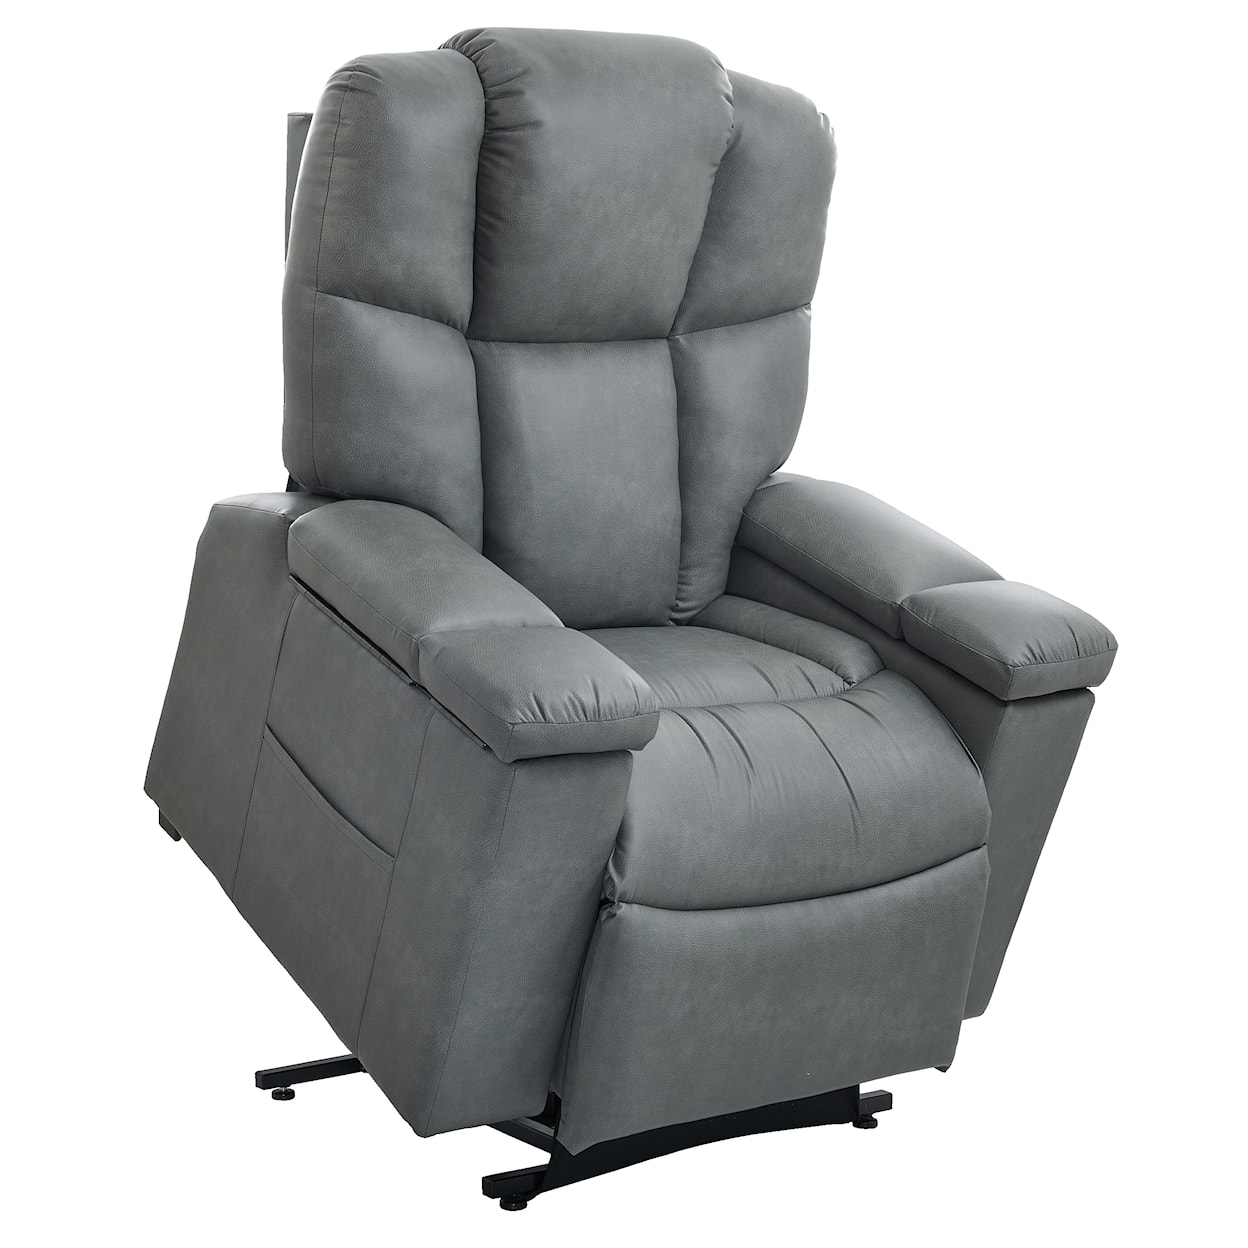 UltraComfort Rigel Lift Chair w/ Pwr Hdrst, Lumbar, & HeatWave